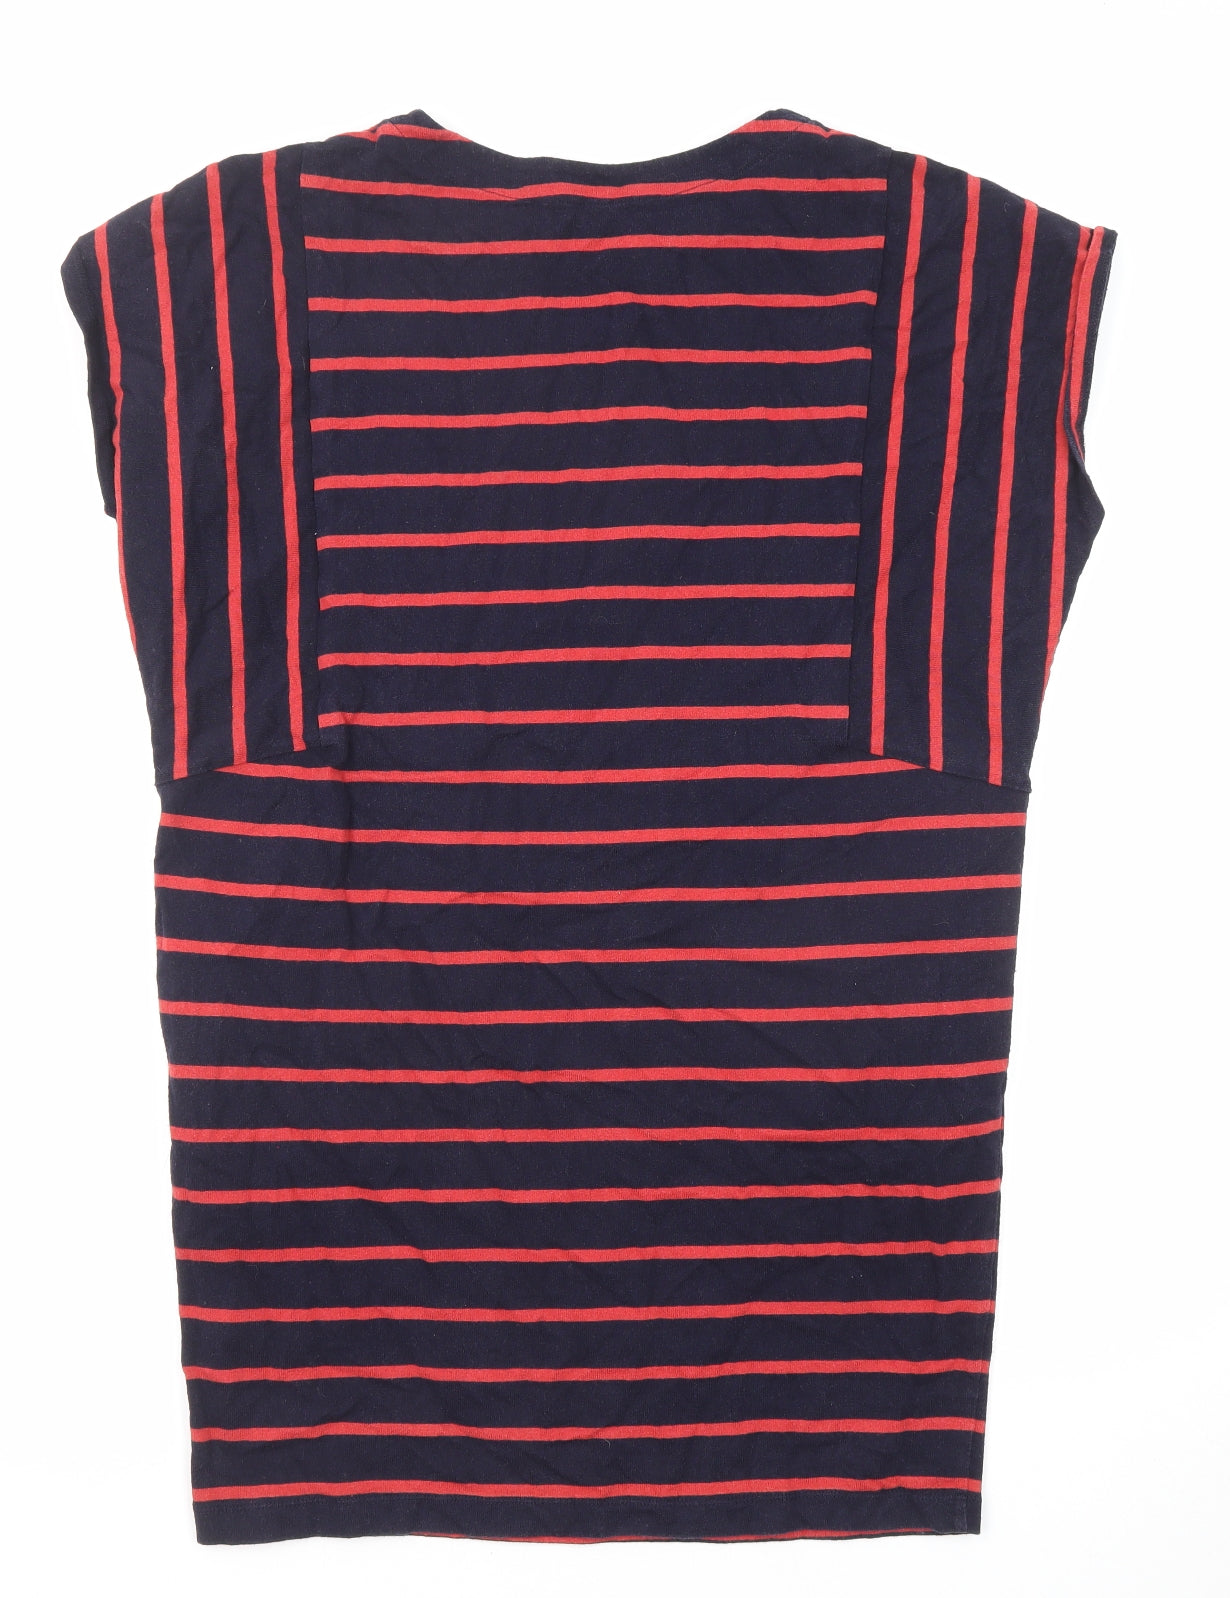 Uniqlo Womens Blue Striped Cotton T-Shirt Dress Size M Round Neck Pullover